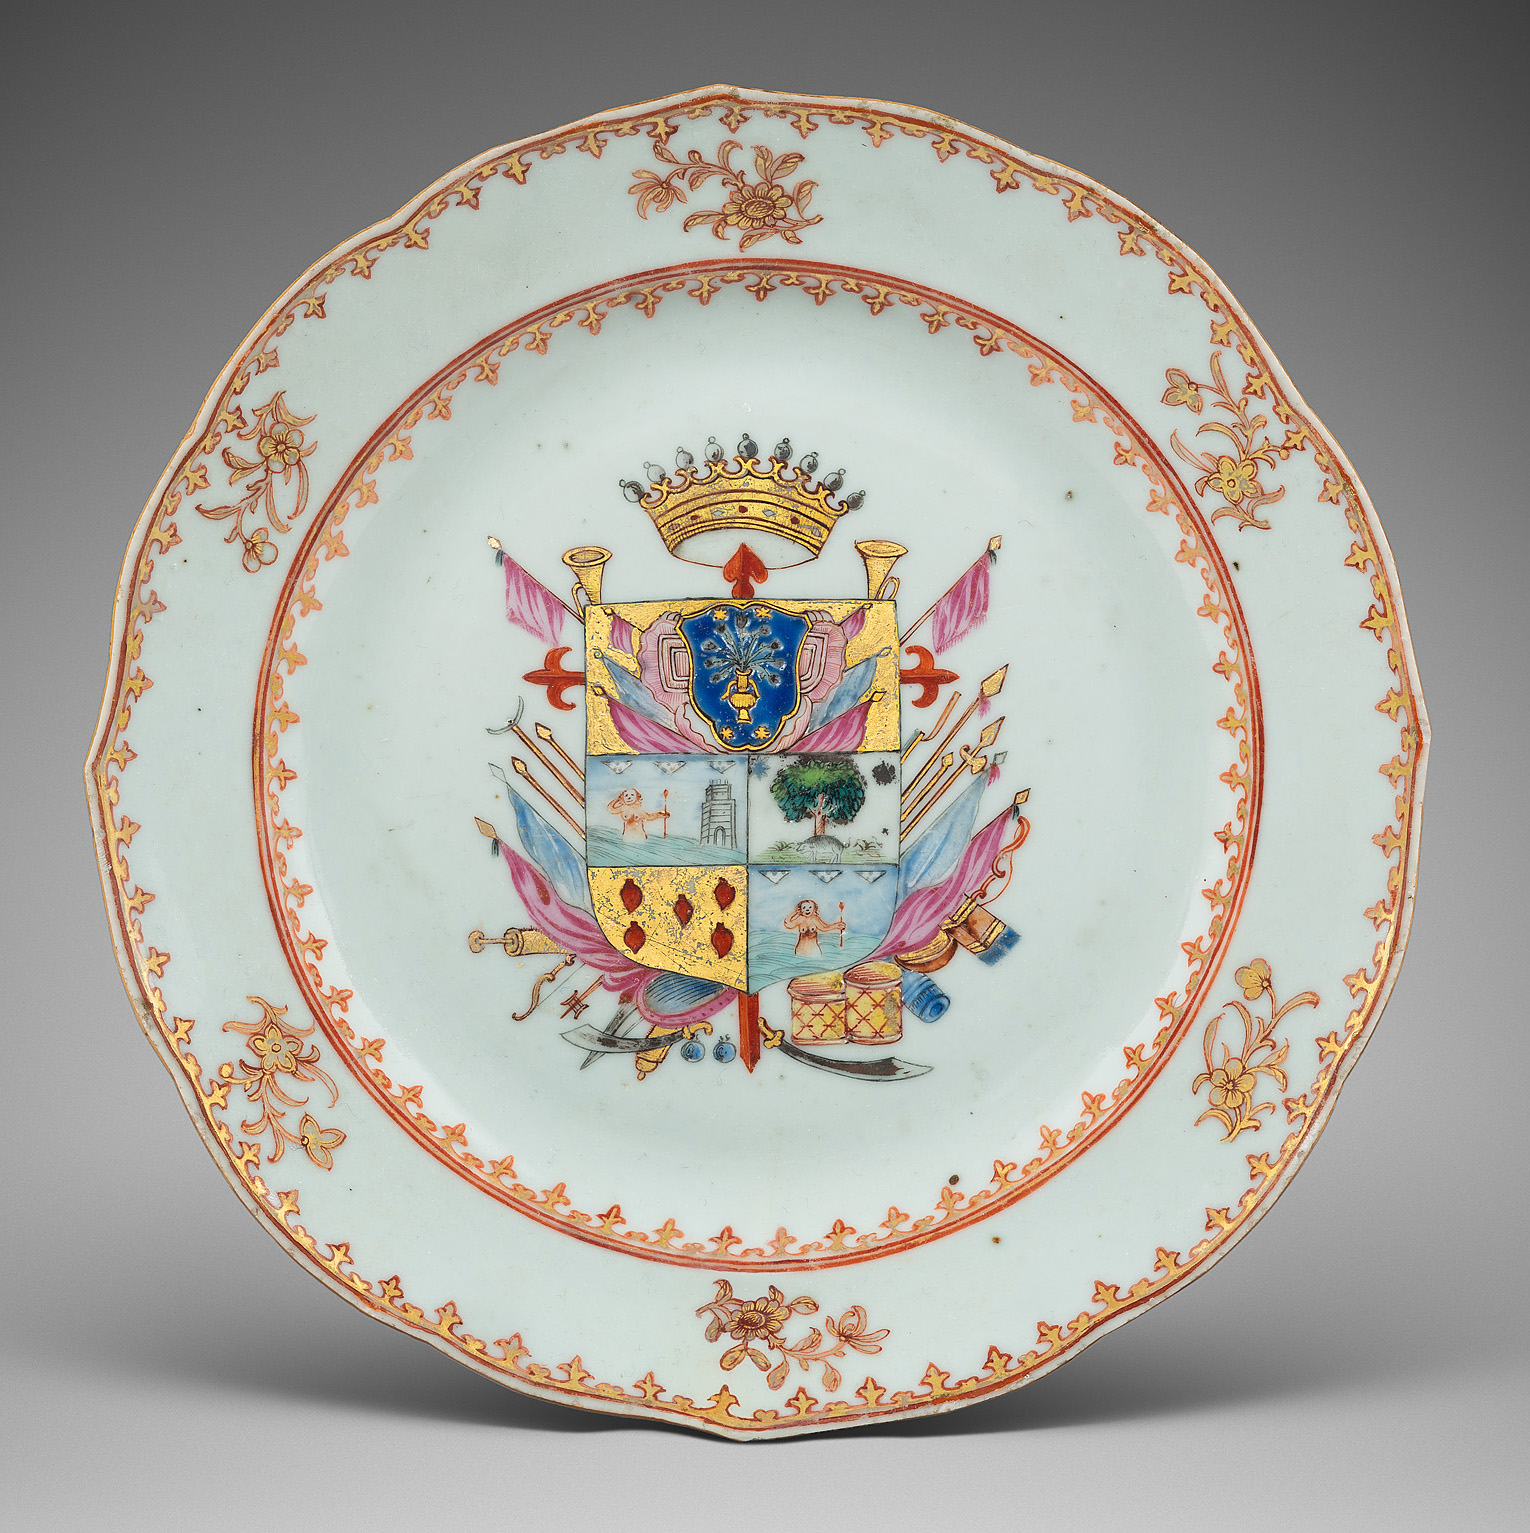 Porcelaine Qianlong period (1736-1795), ca. 1770, Chine